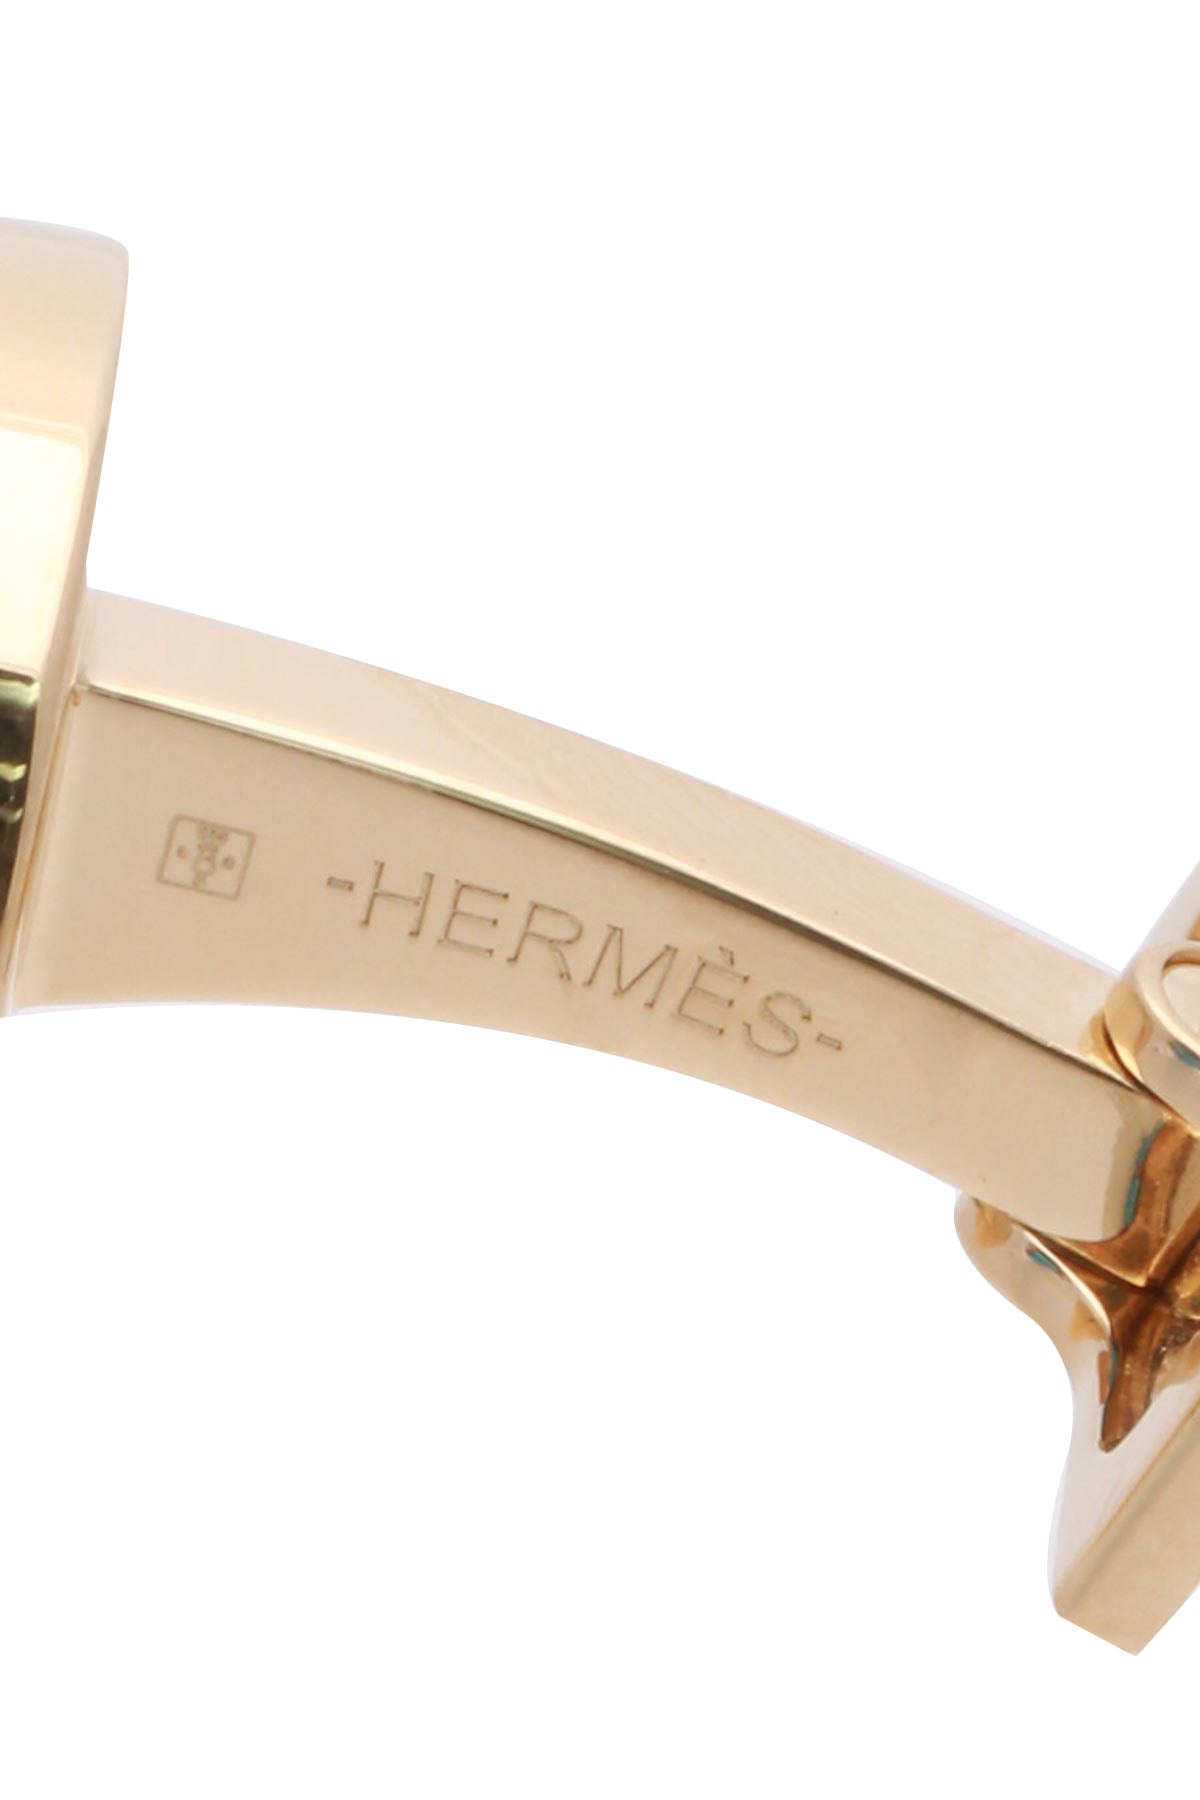 Hermès - Licol 2 Cufflinks